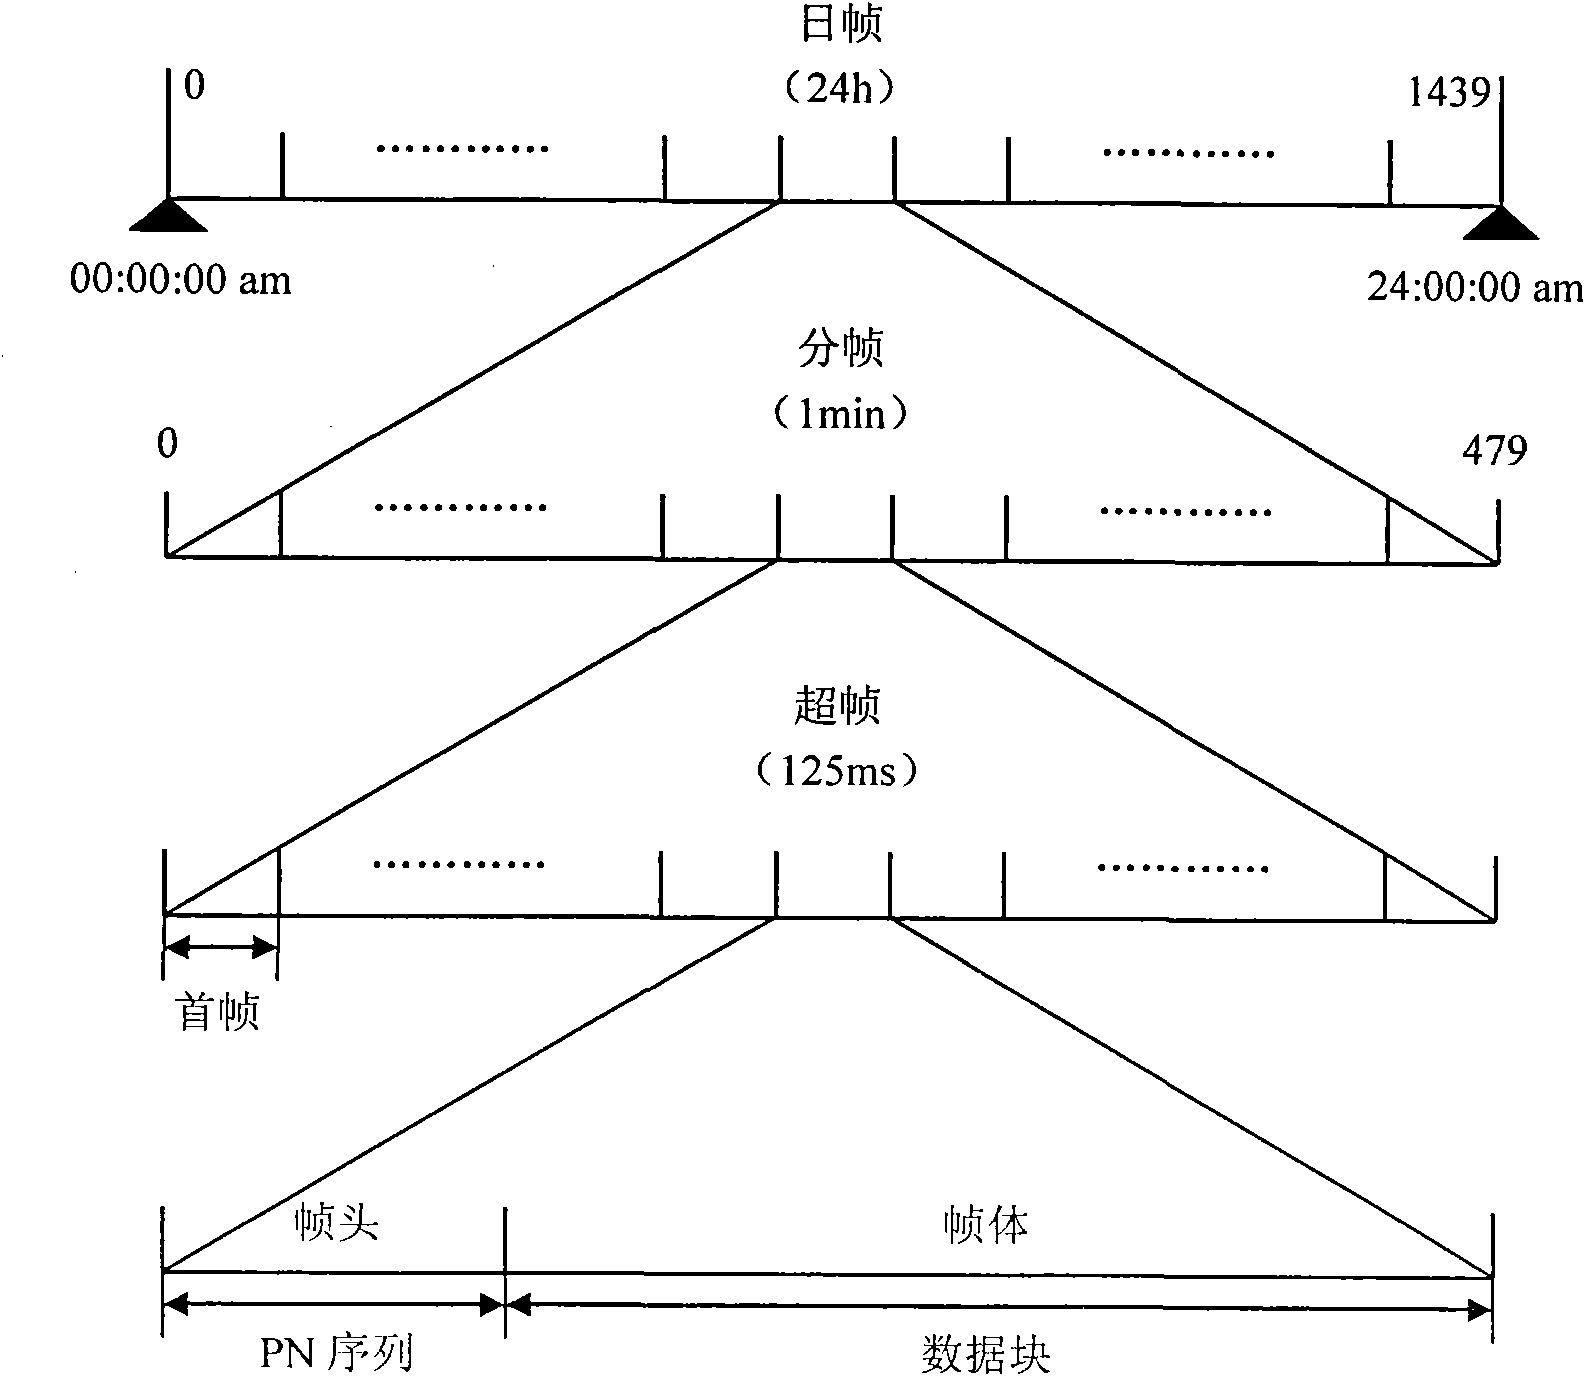 Frequency deviation estimating method of receiver based on DTTB (Digital Television Terrestrial Broadcasting) standard